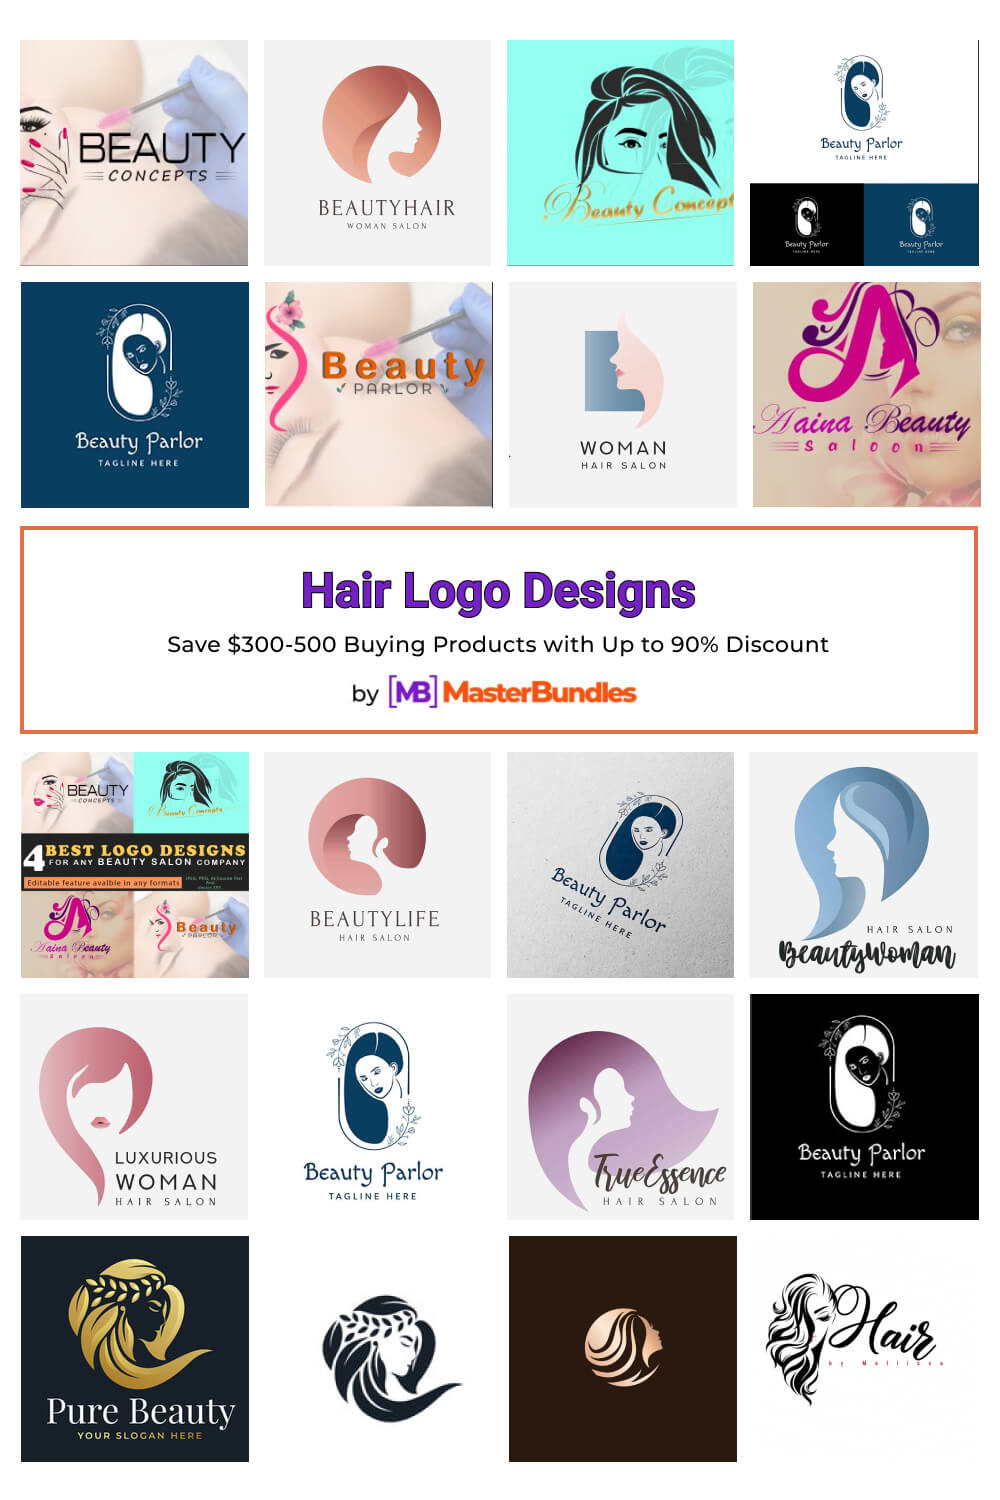 hair logo designs pinterest image.